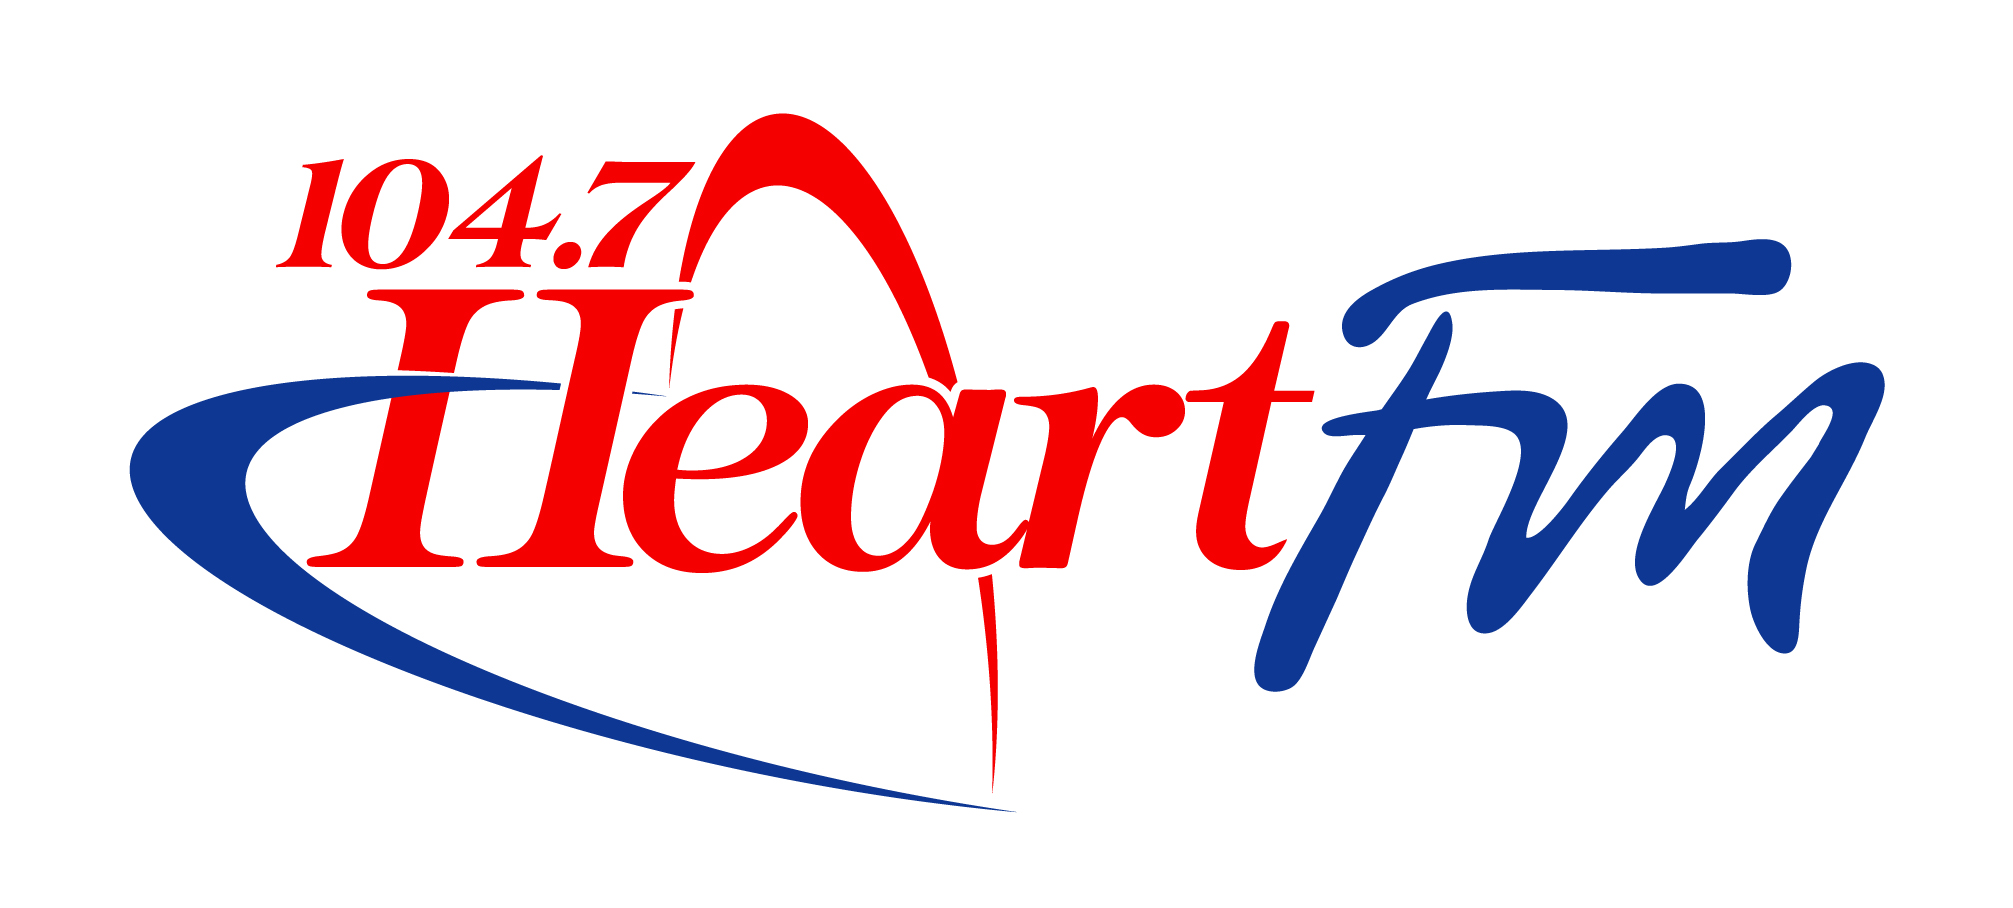 Heart FM Logo